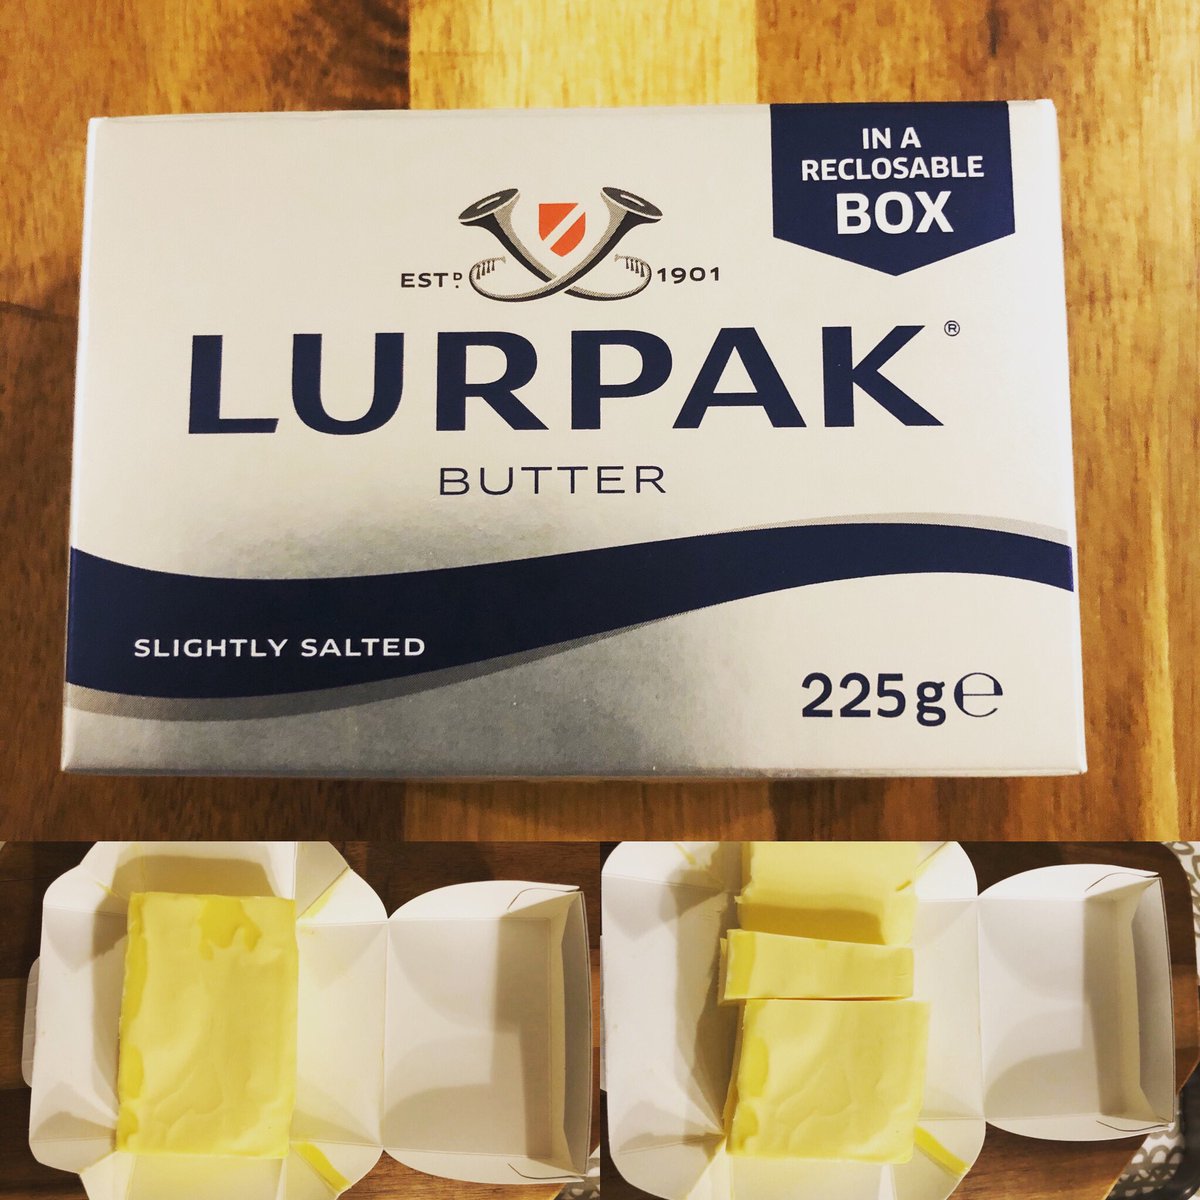 I’m so proud of the new Lurpak package - finally a package for butter that makes sense. Got to love it. Way to go Lurpak team!
#lurpak #arla #arlafoods #package #bestpackage #bestbutter #butter